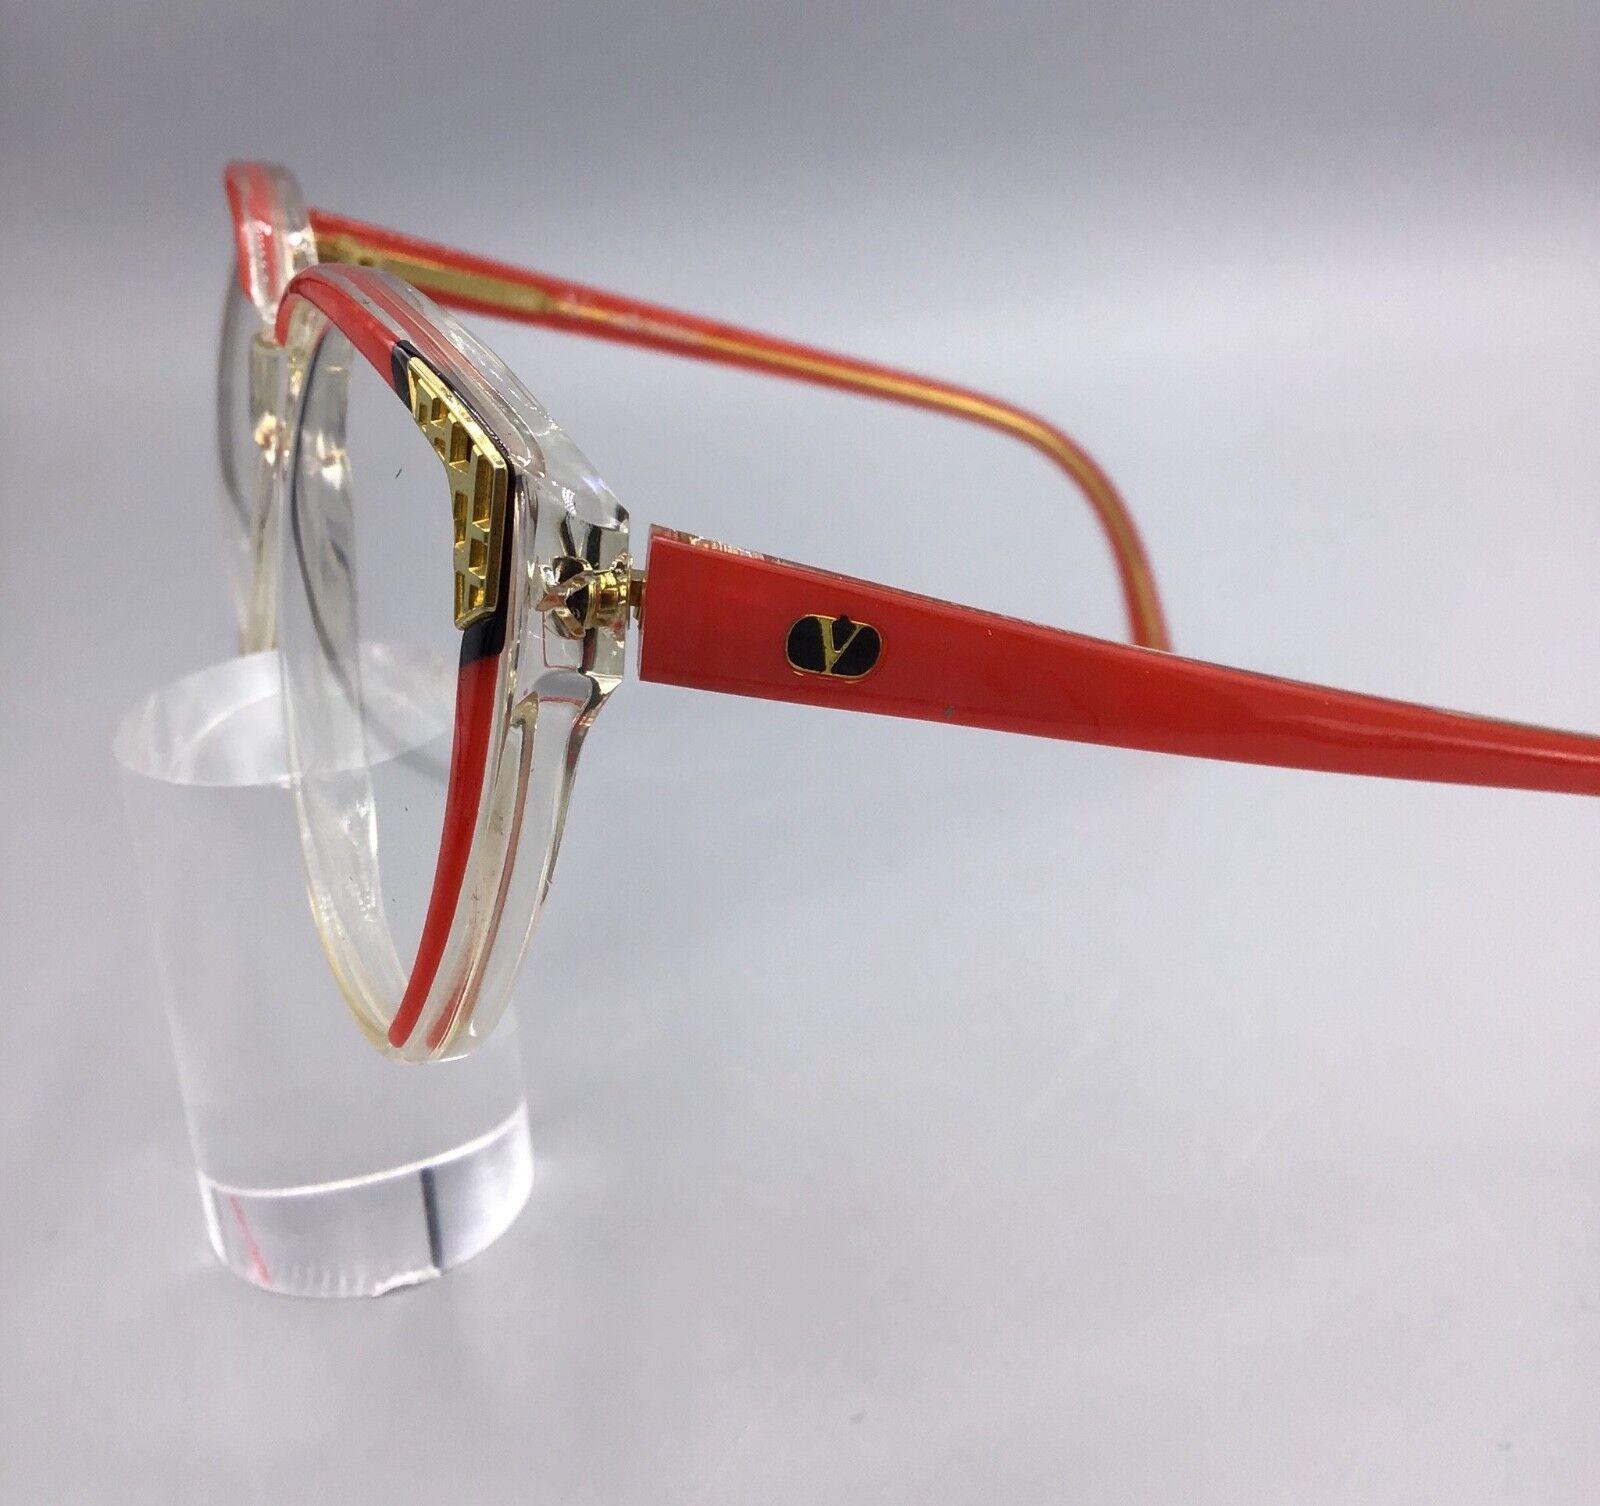 Valentino occhiale vintage eyewear glasses sonnenbrillen lunettes gafas model 131 P9